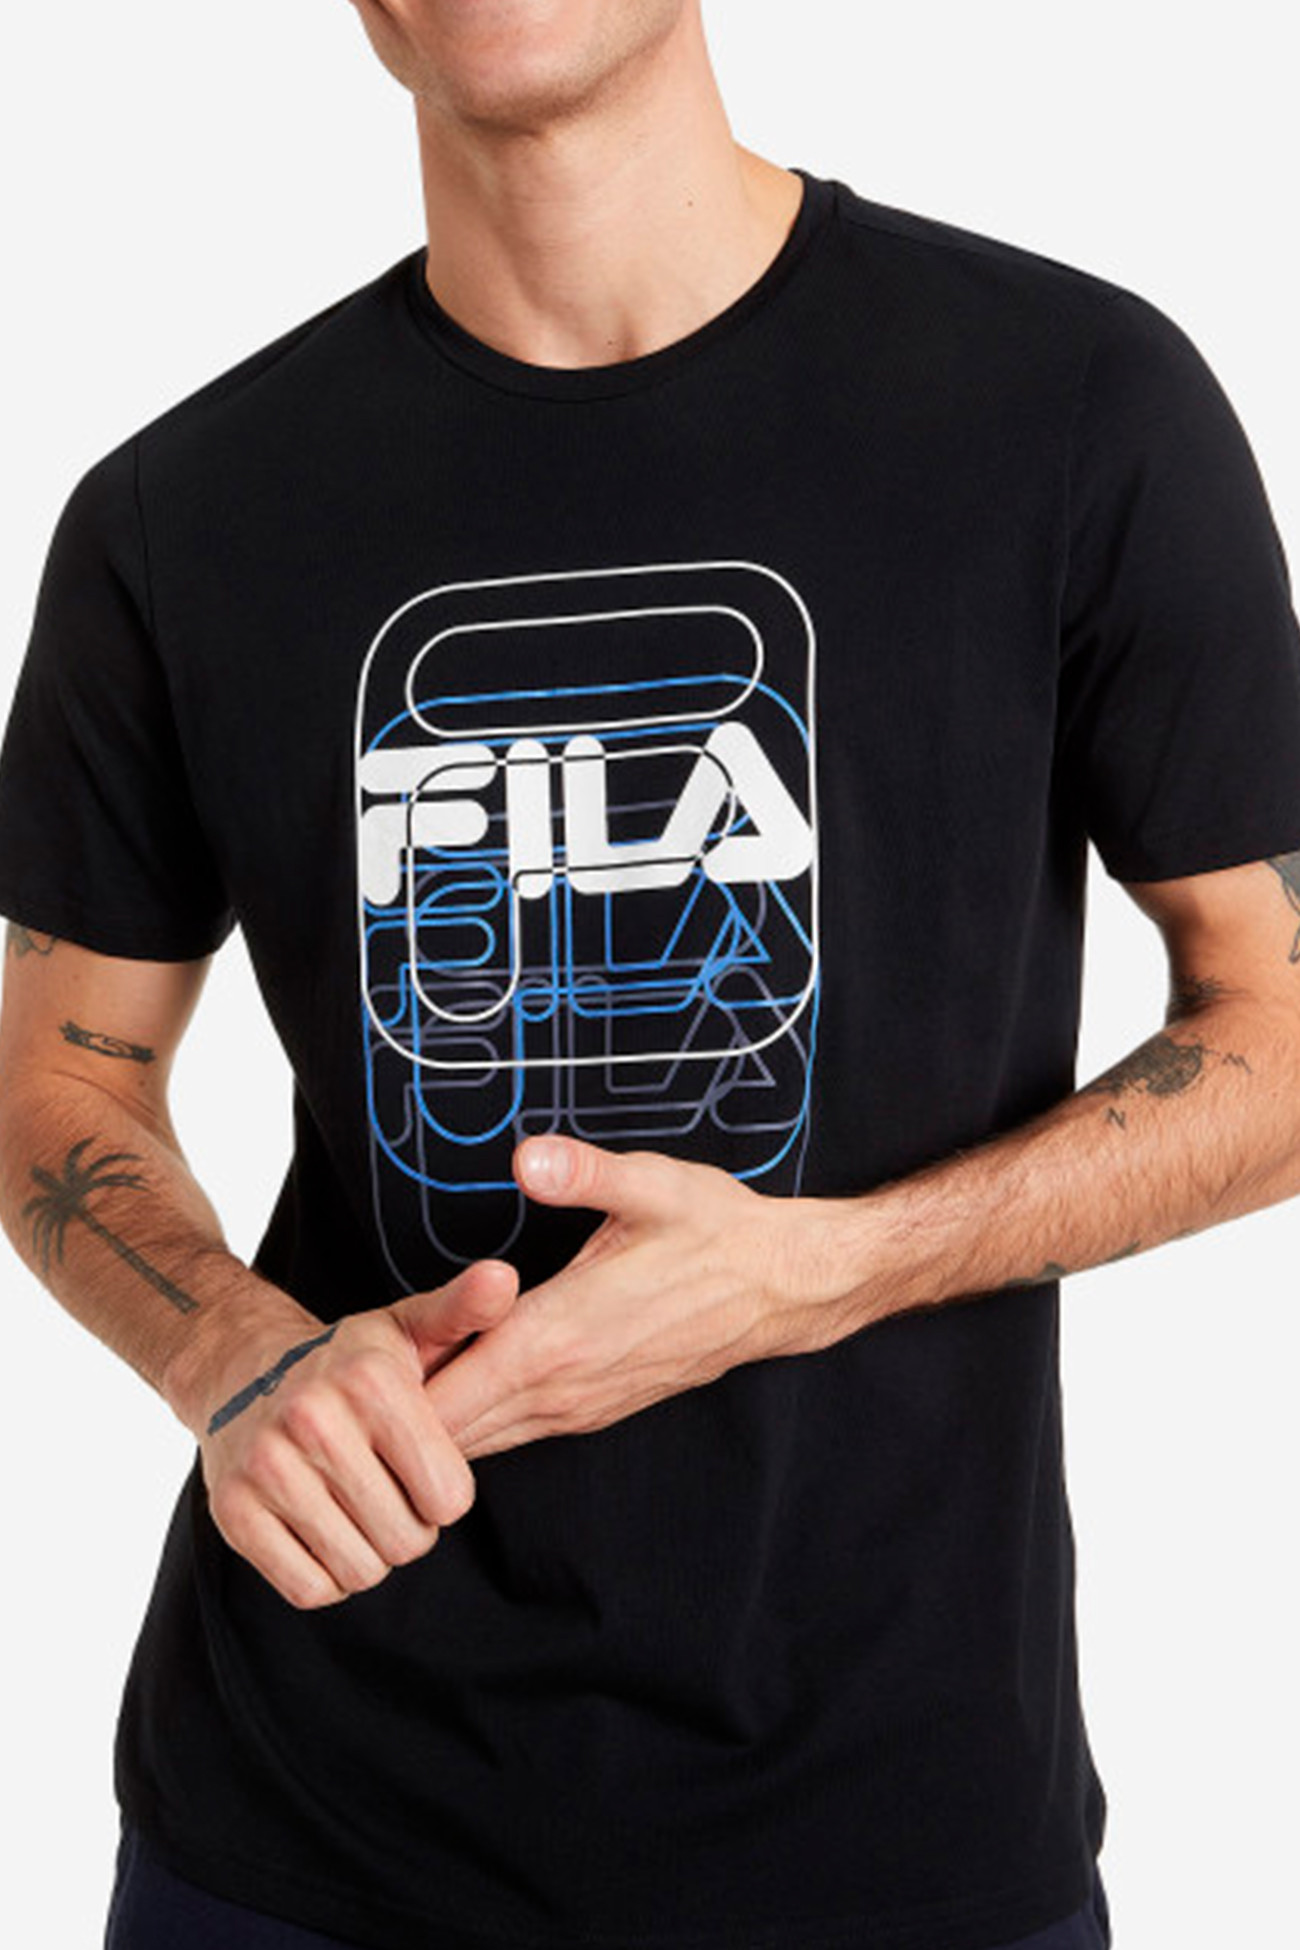 Футболка мужская FILA T-shirt черная 113359-99 изображение 2